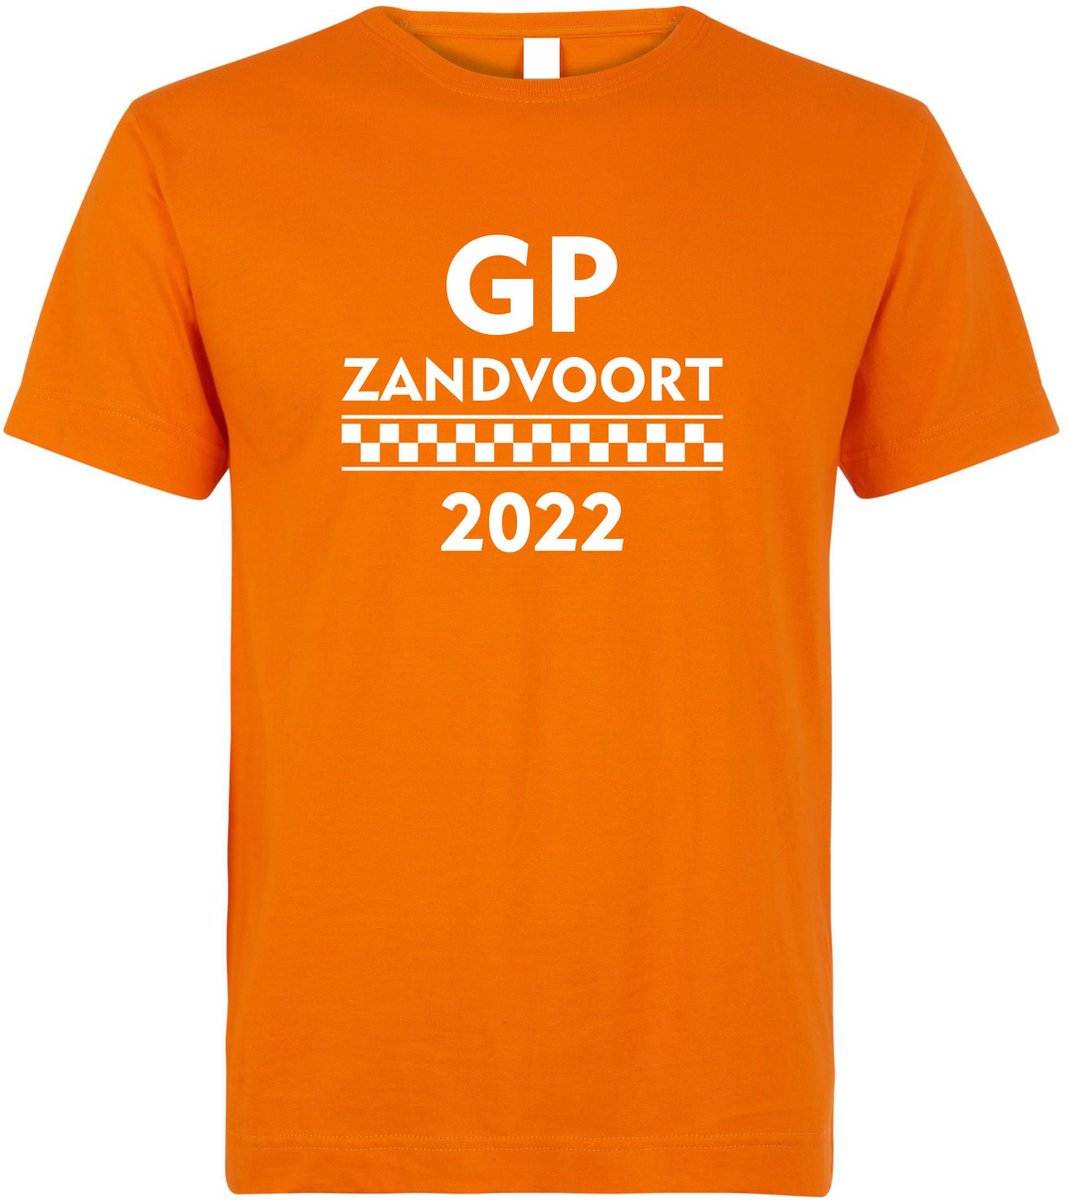 T-shirt GP Zandvoort 2022 | Max Verstappen / Red Bull Racing / Formule 1 fan | Grand Prix Circuit Zandvoort | kleding shirt | Oranje | maat 5XL